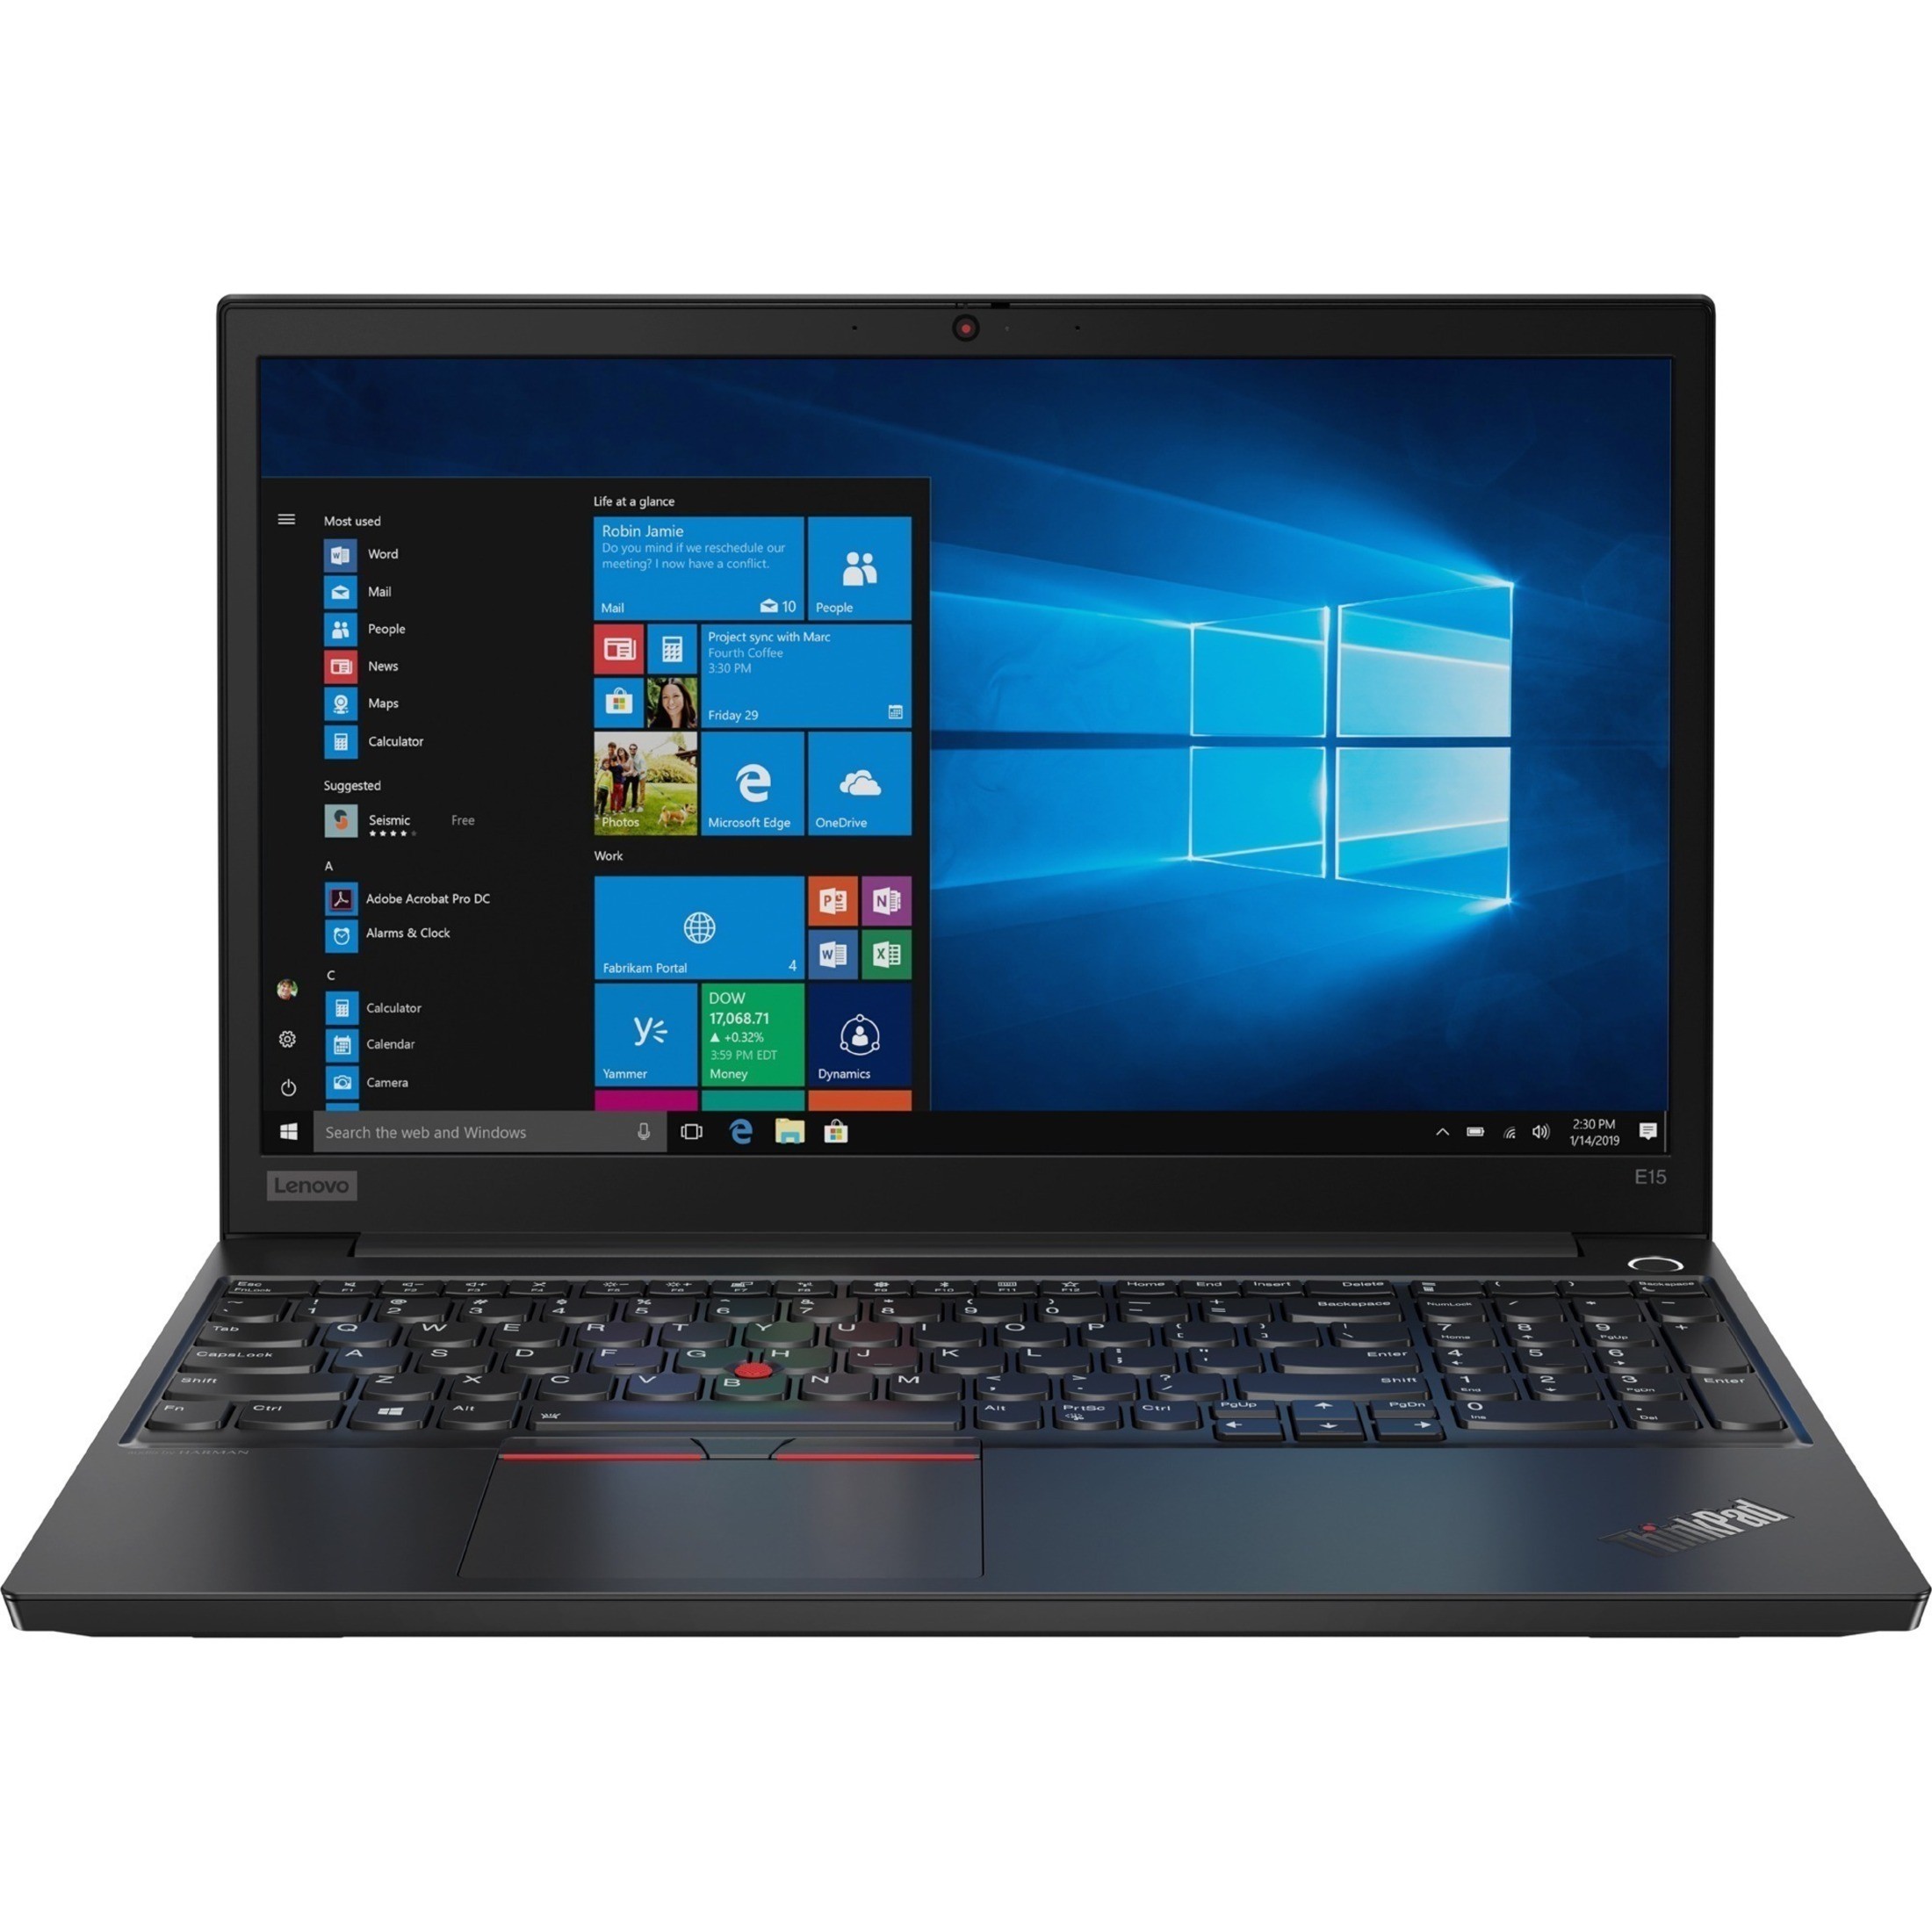 Lenovo ThinkPad E15 15.6" FHD IPS i7-10510U 1.8GHz 4GB 256GB SSD W10P Laptop R